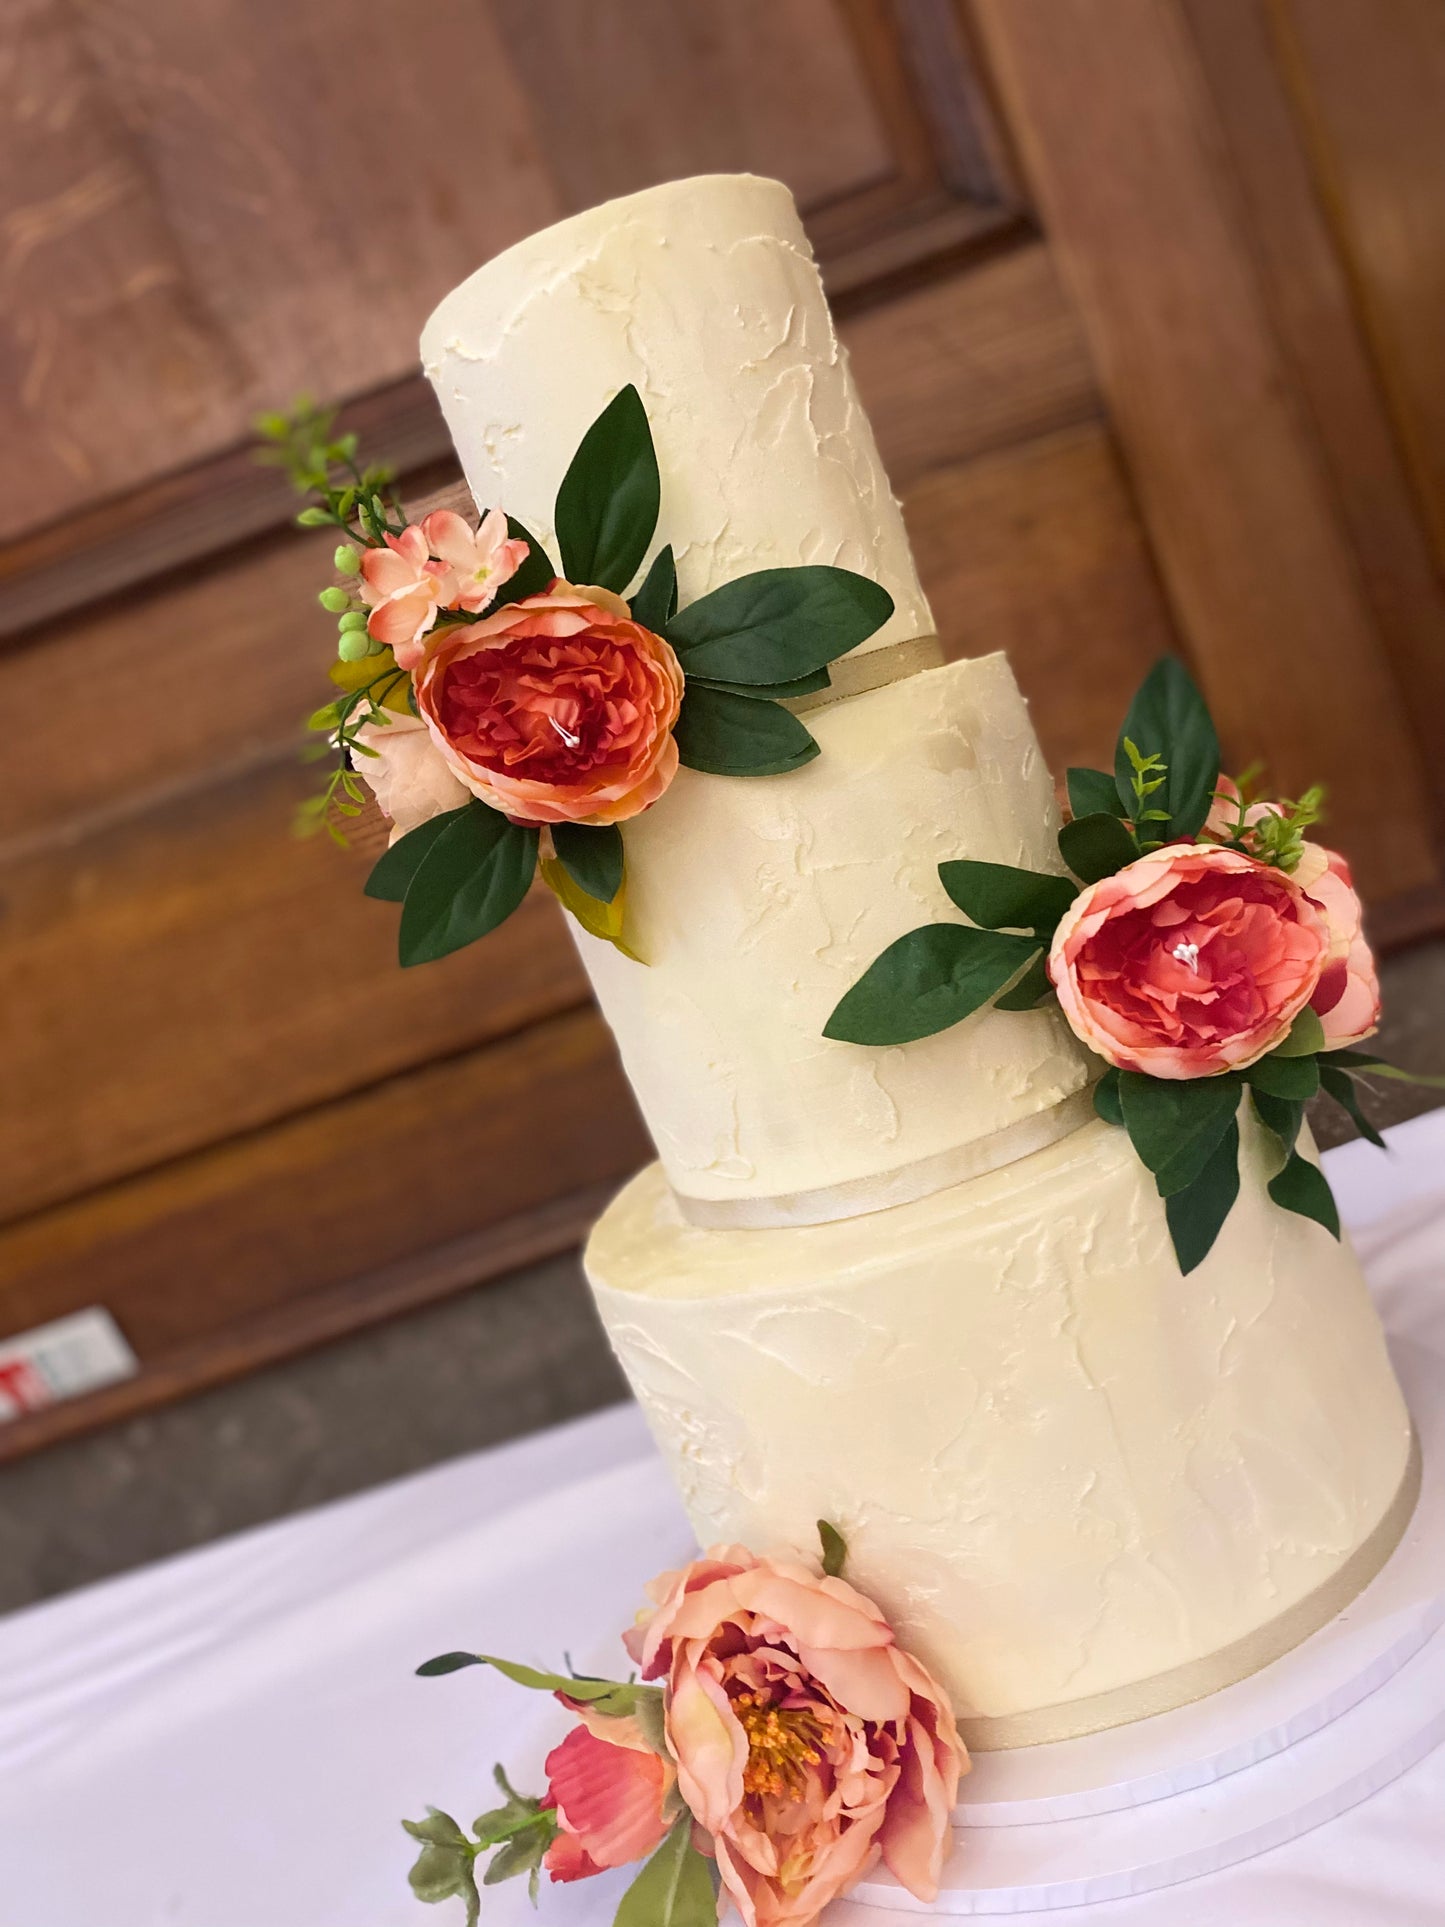 Three-tier rustic buttercream wedding cake